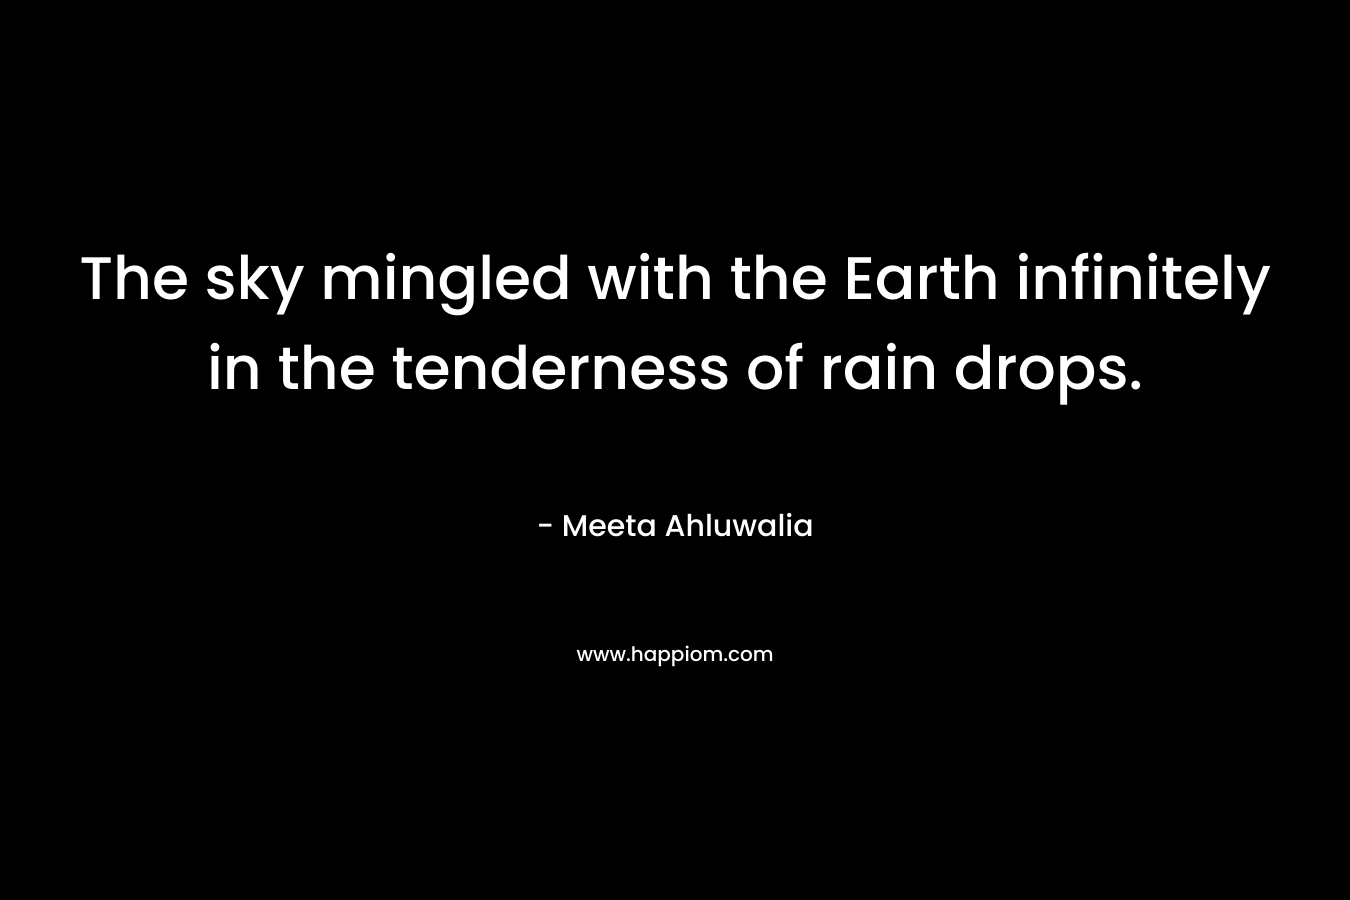 The sky mingled with the Earth infinitely in the tenderness of rain drops. – Meeta Ahluwalia